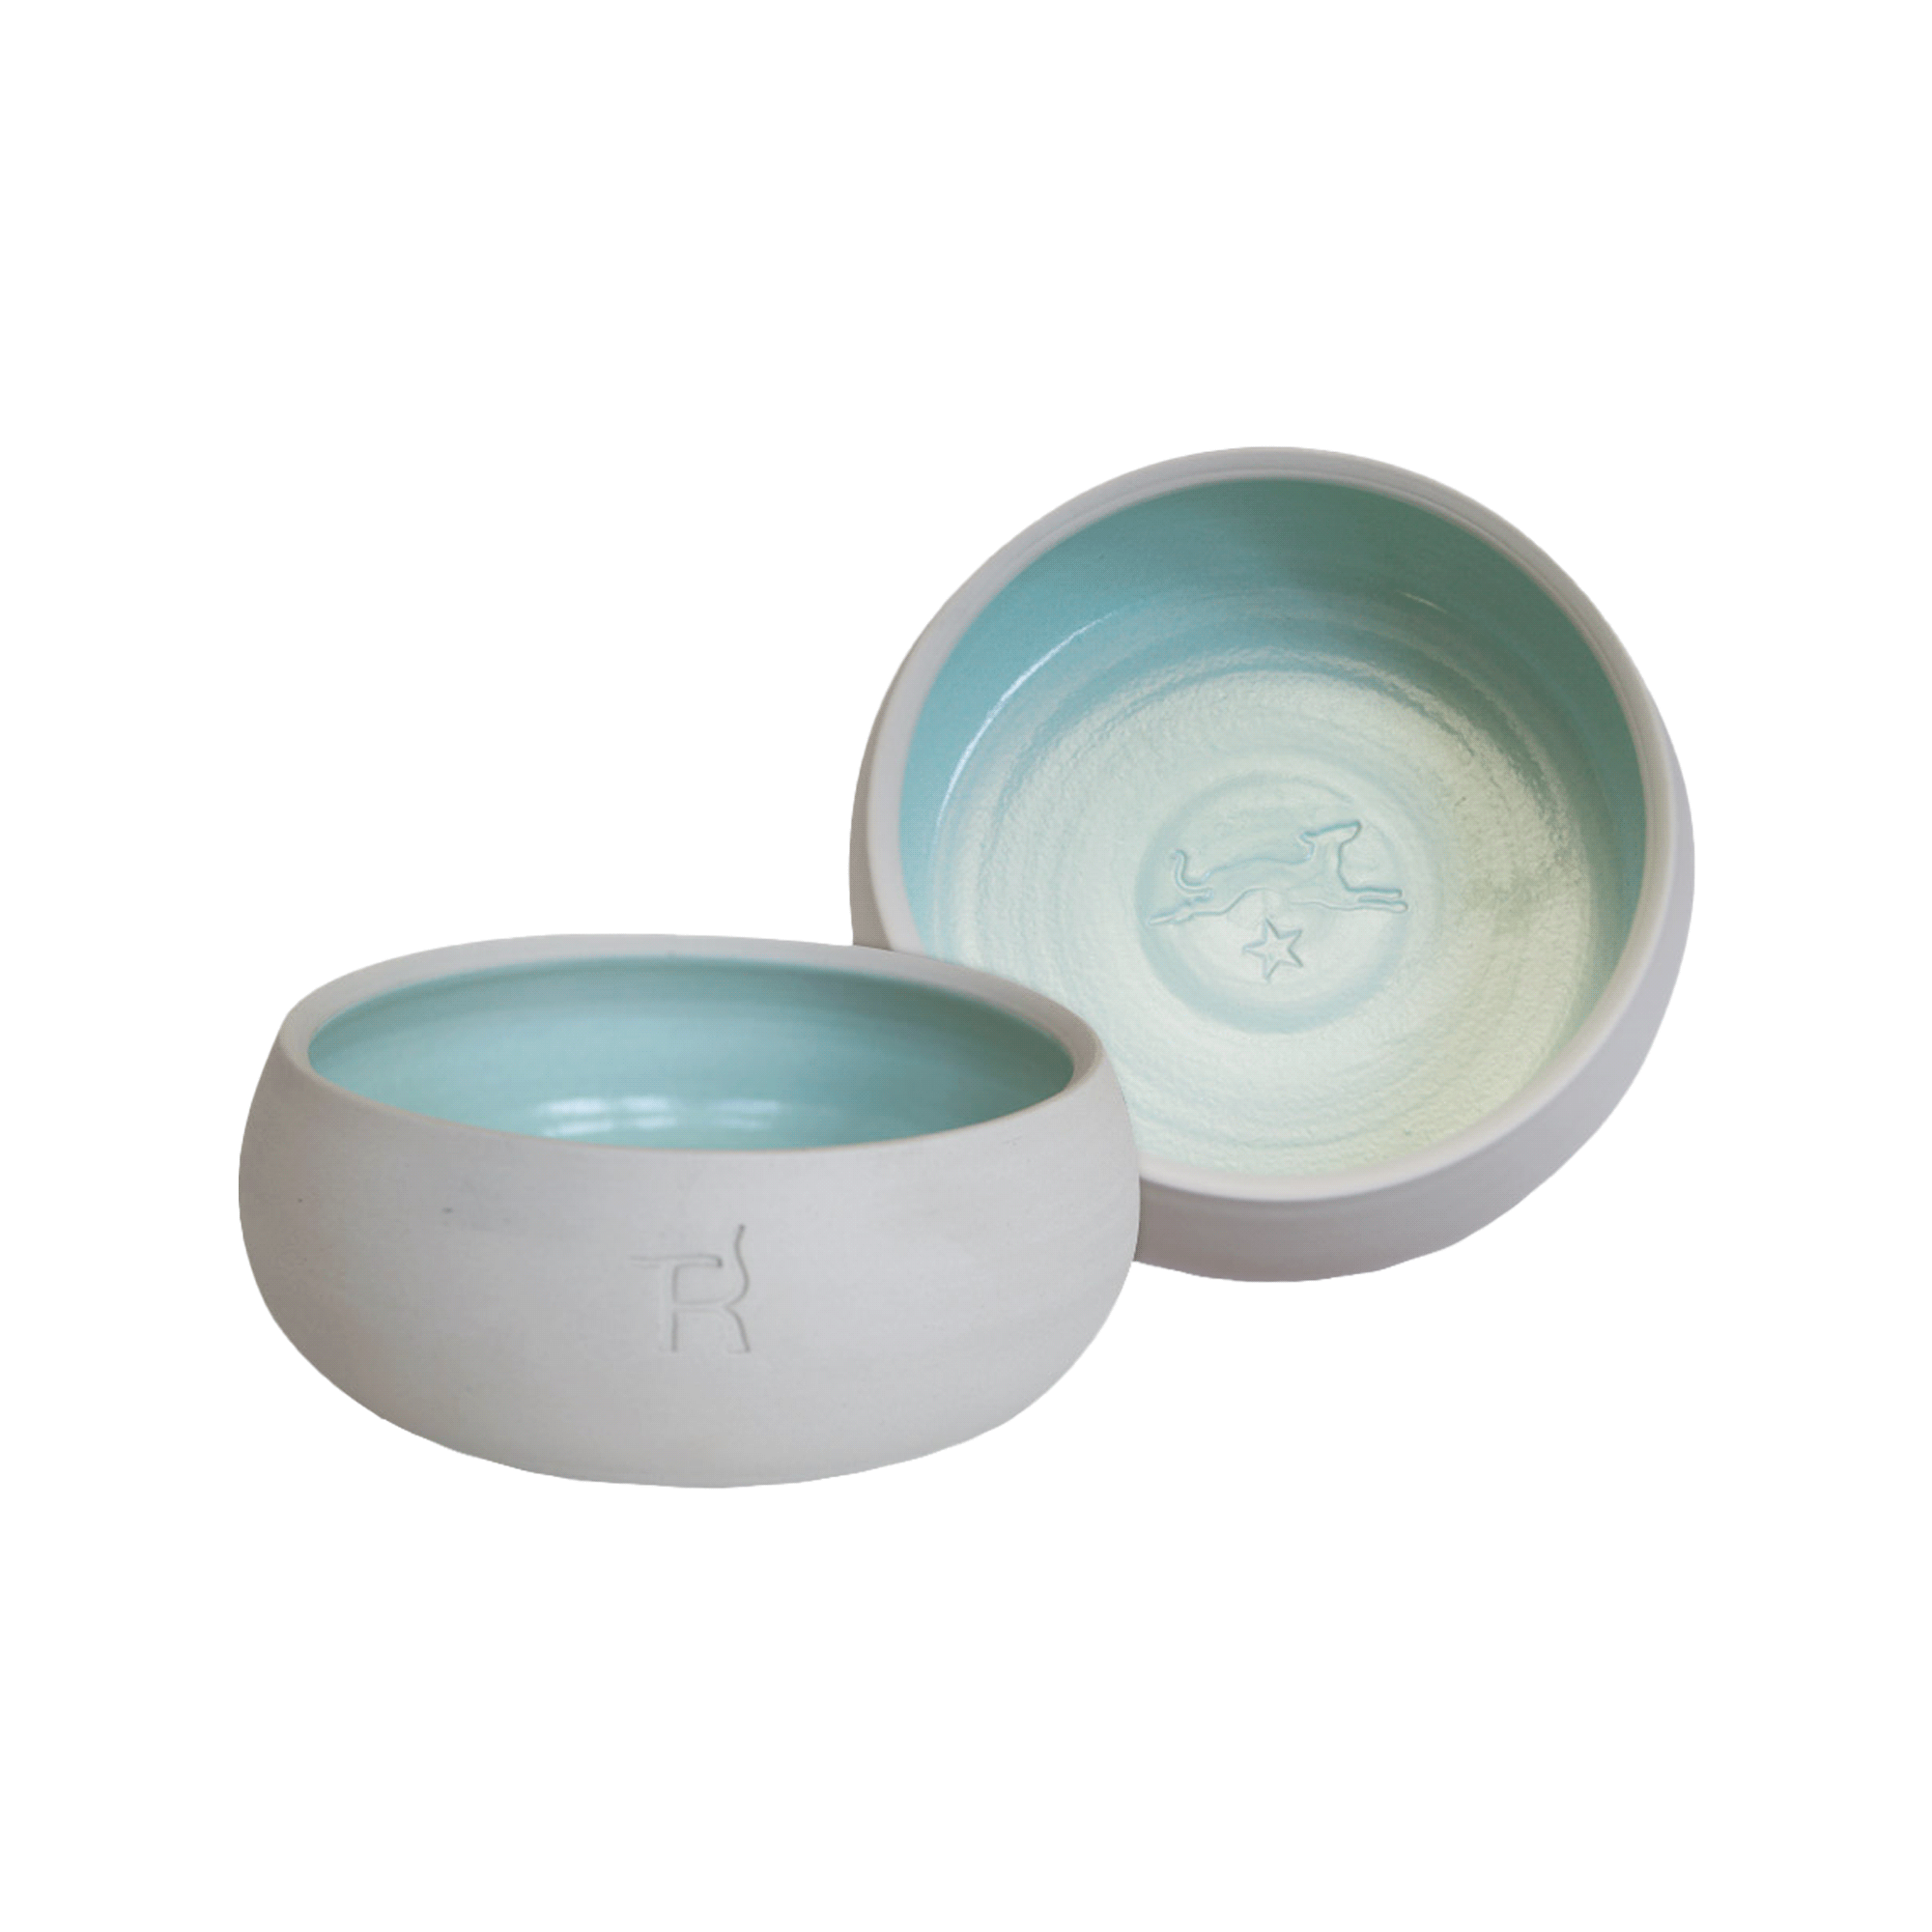 Ceramic dog bowl – natural colour / mint